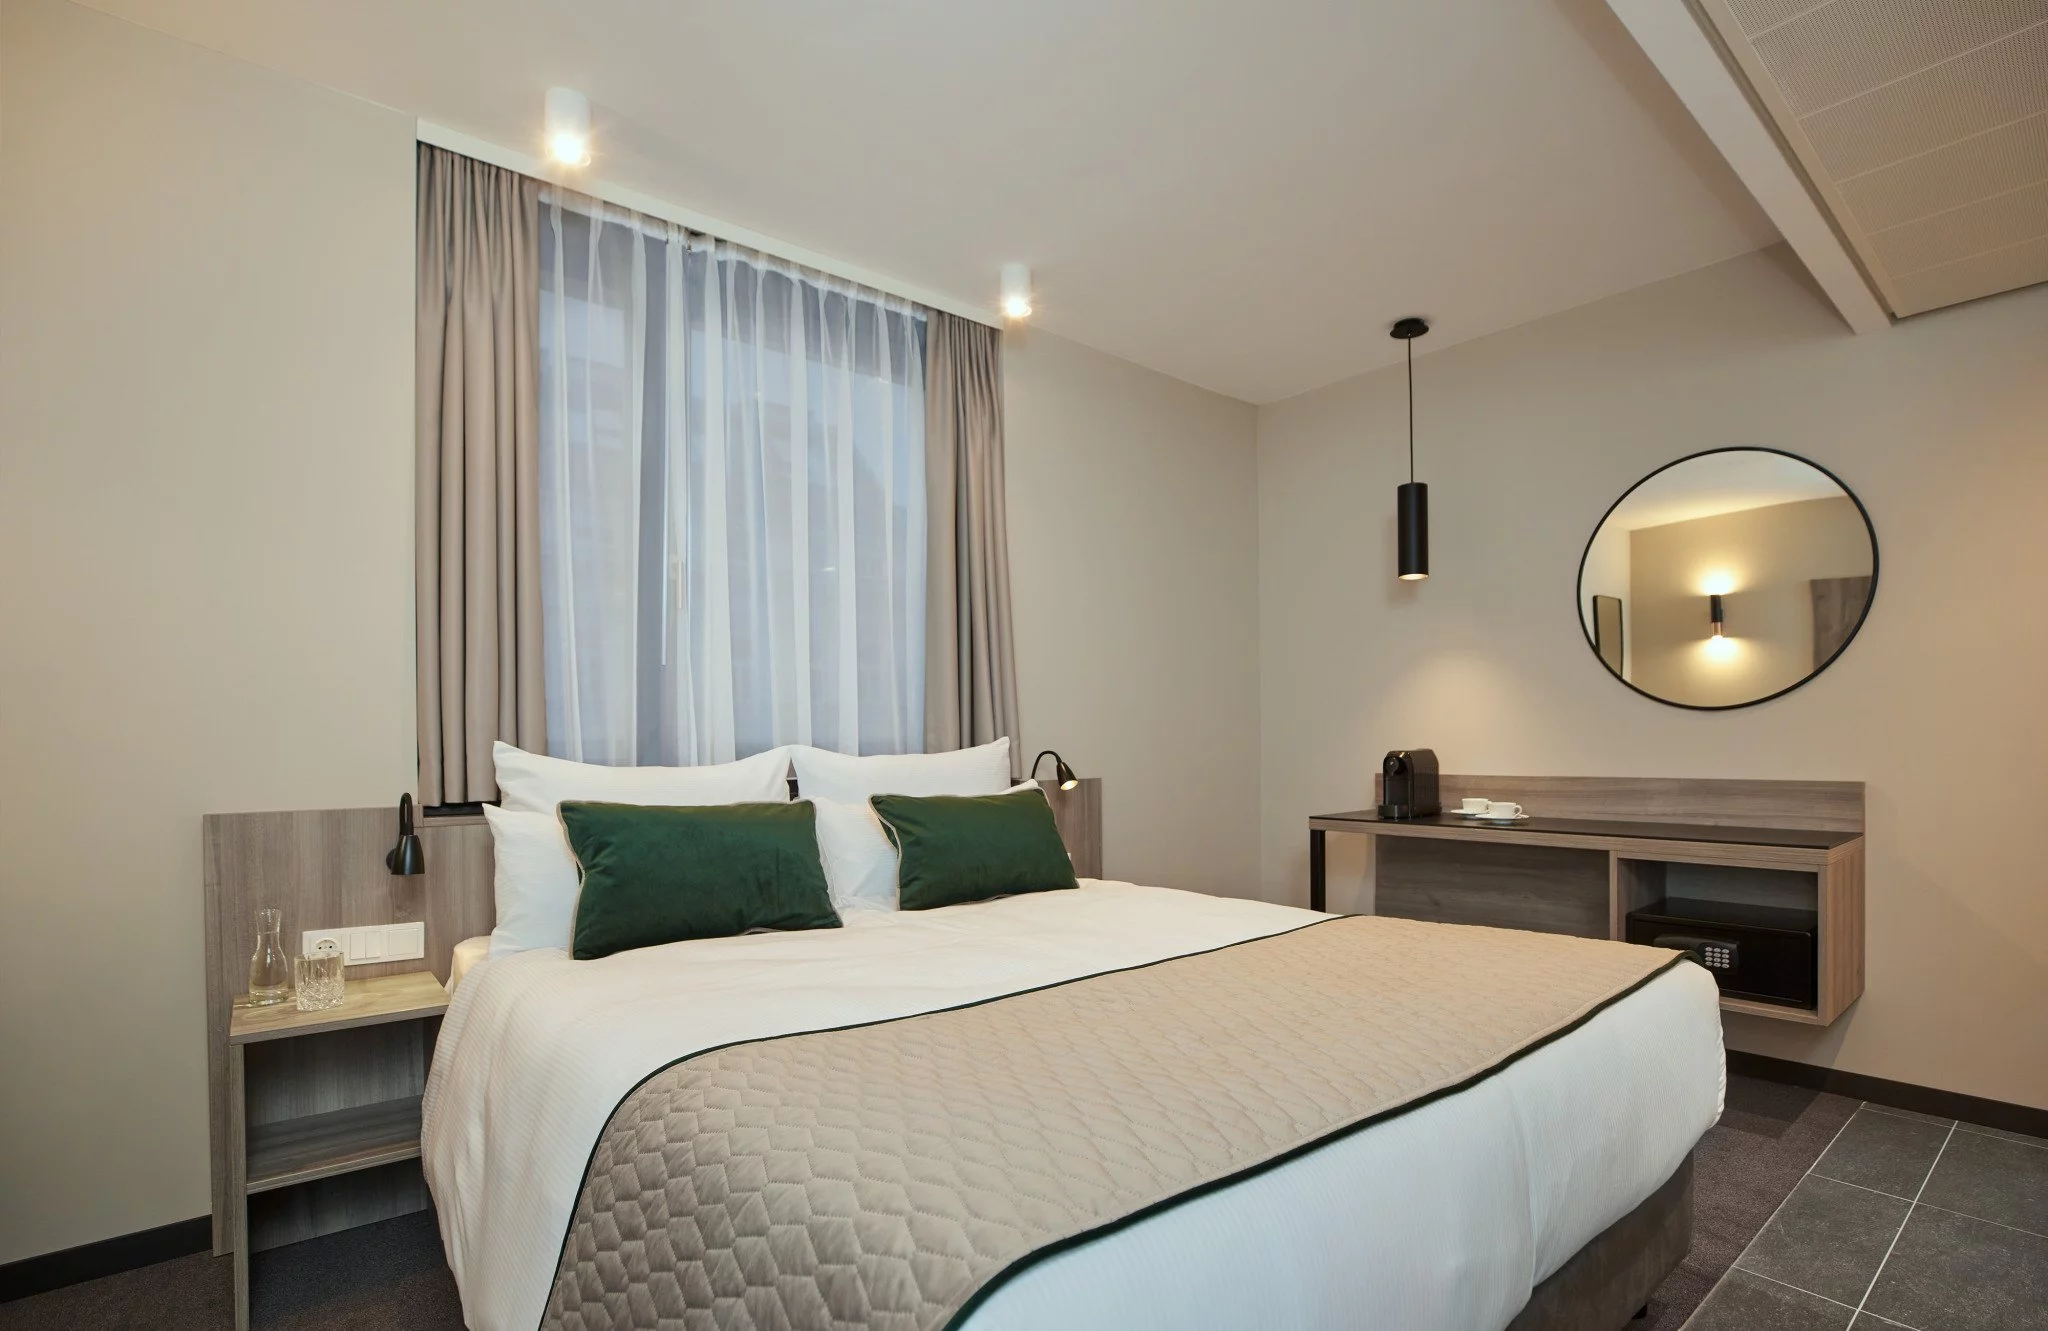 Leonardo Hotel Vienna Otto-Wagner - Comfort Room